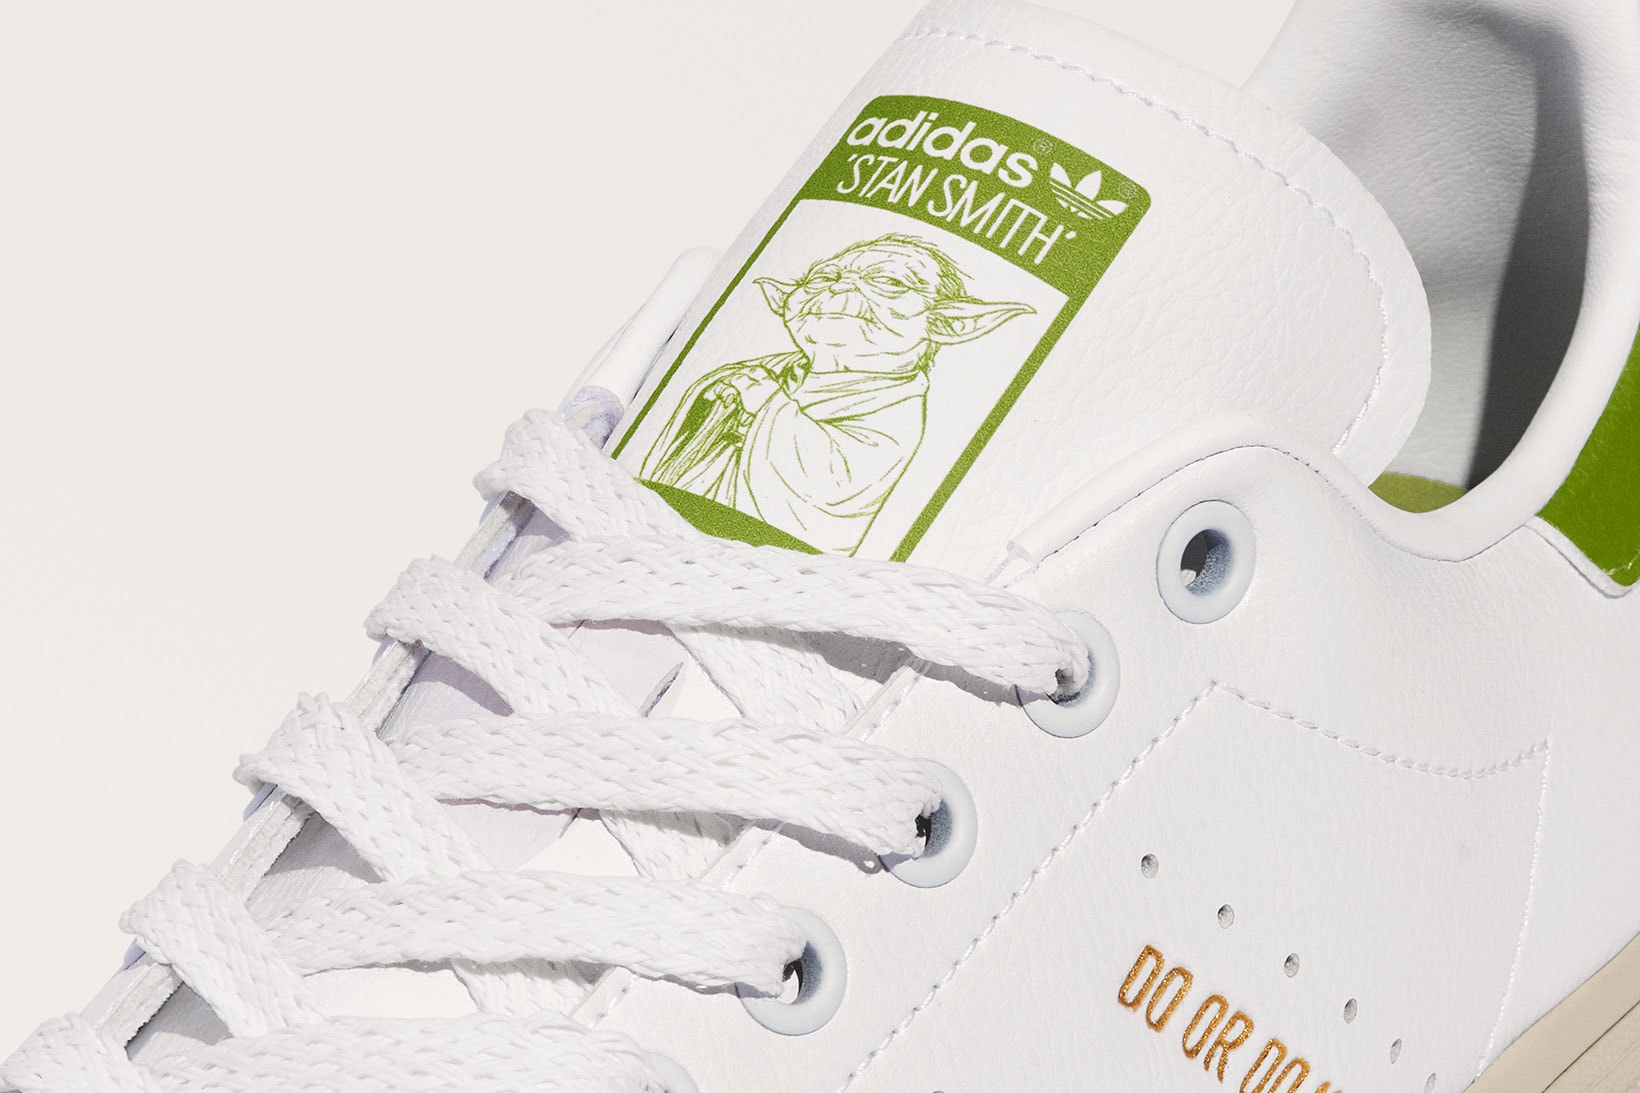 adidas originals stan smith star wars yoda collaboration sustainable sneakers green white footwear kicks shoes sneakerhead